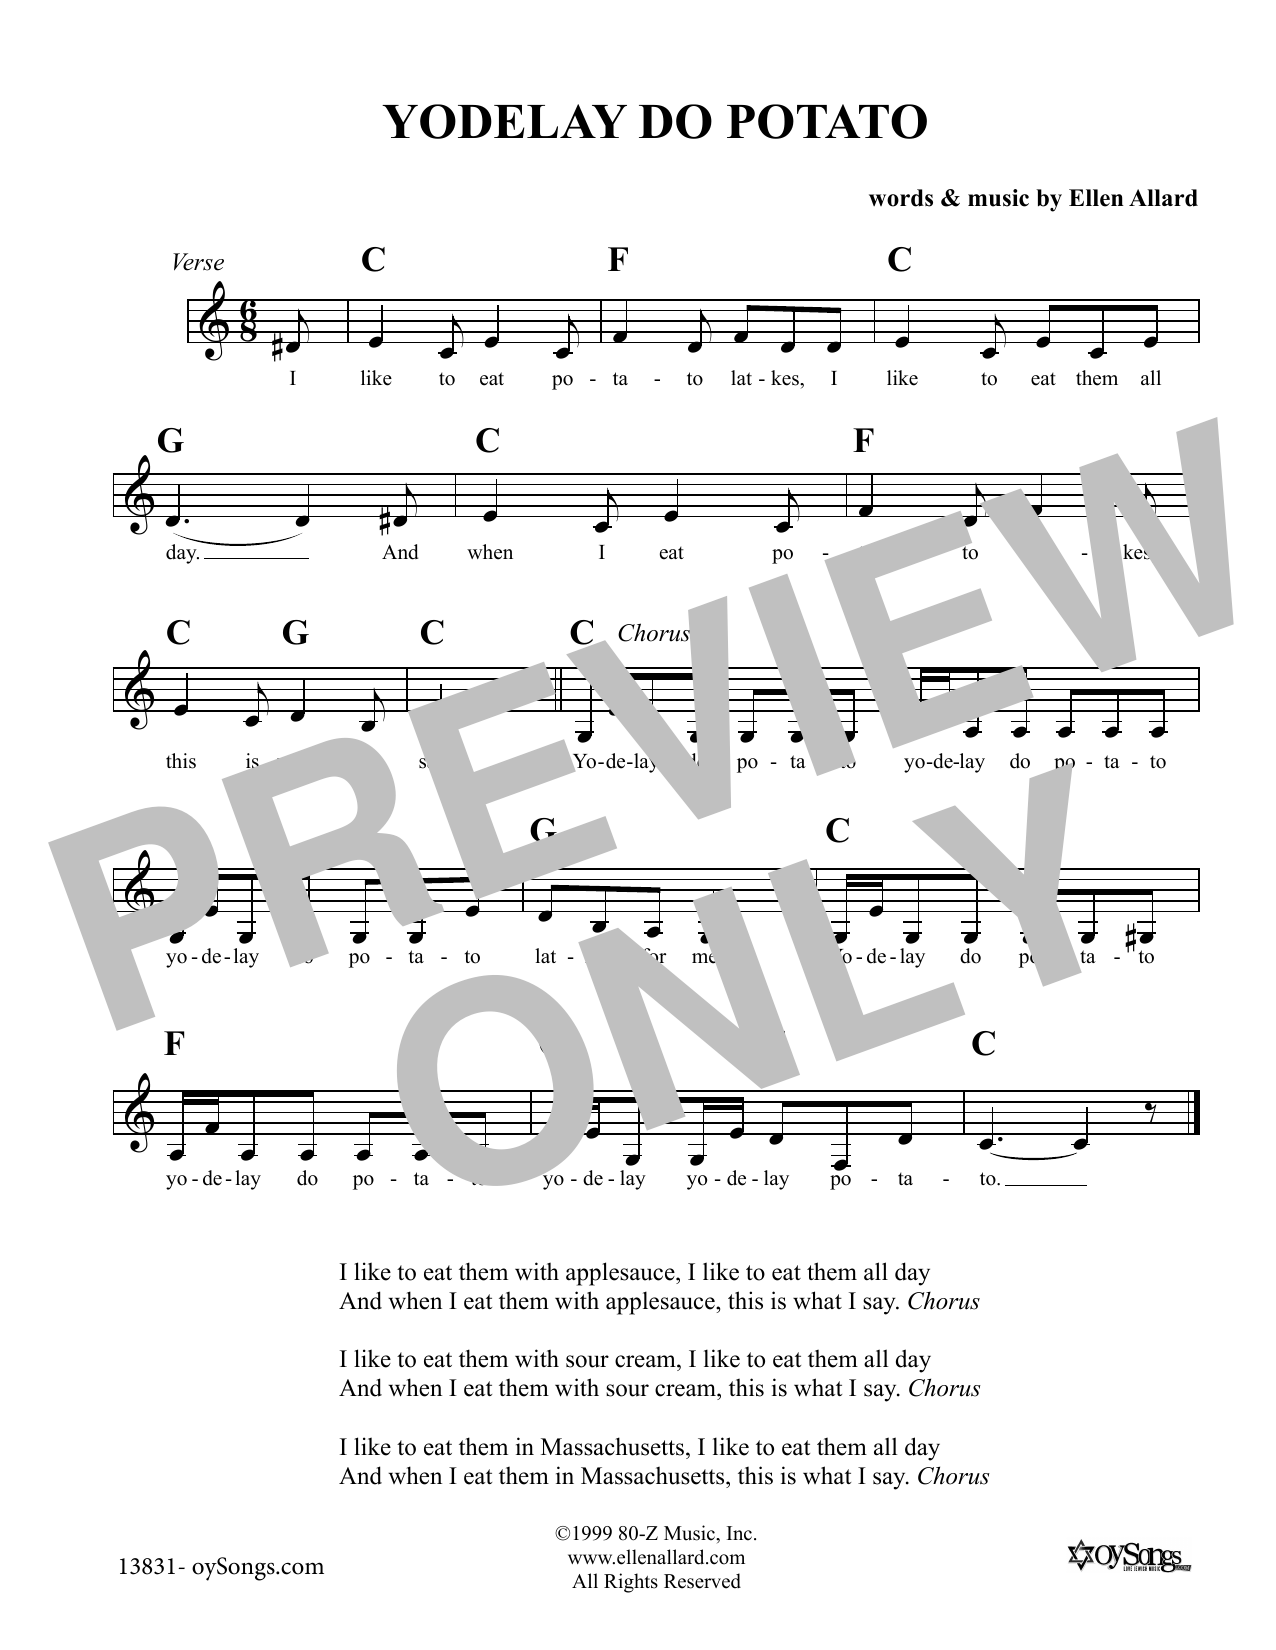 Ellen Allard Yodelay Do Potato Sheet Music Notes & Chords for Melody Line, Lyrics & Chords - Download or Print PDF